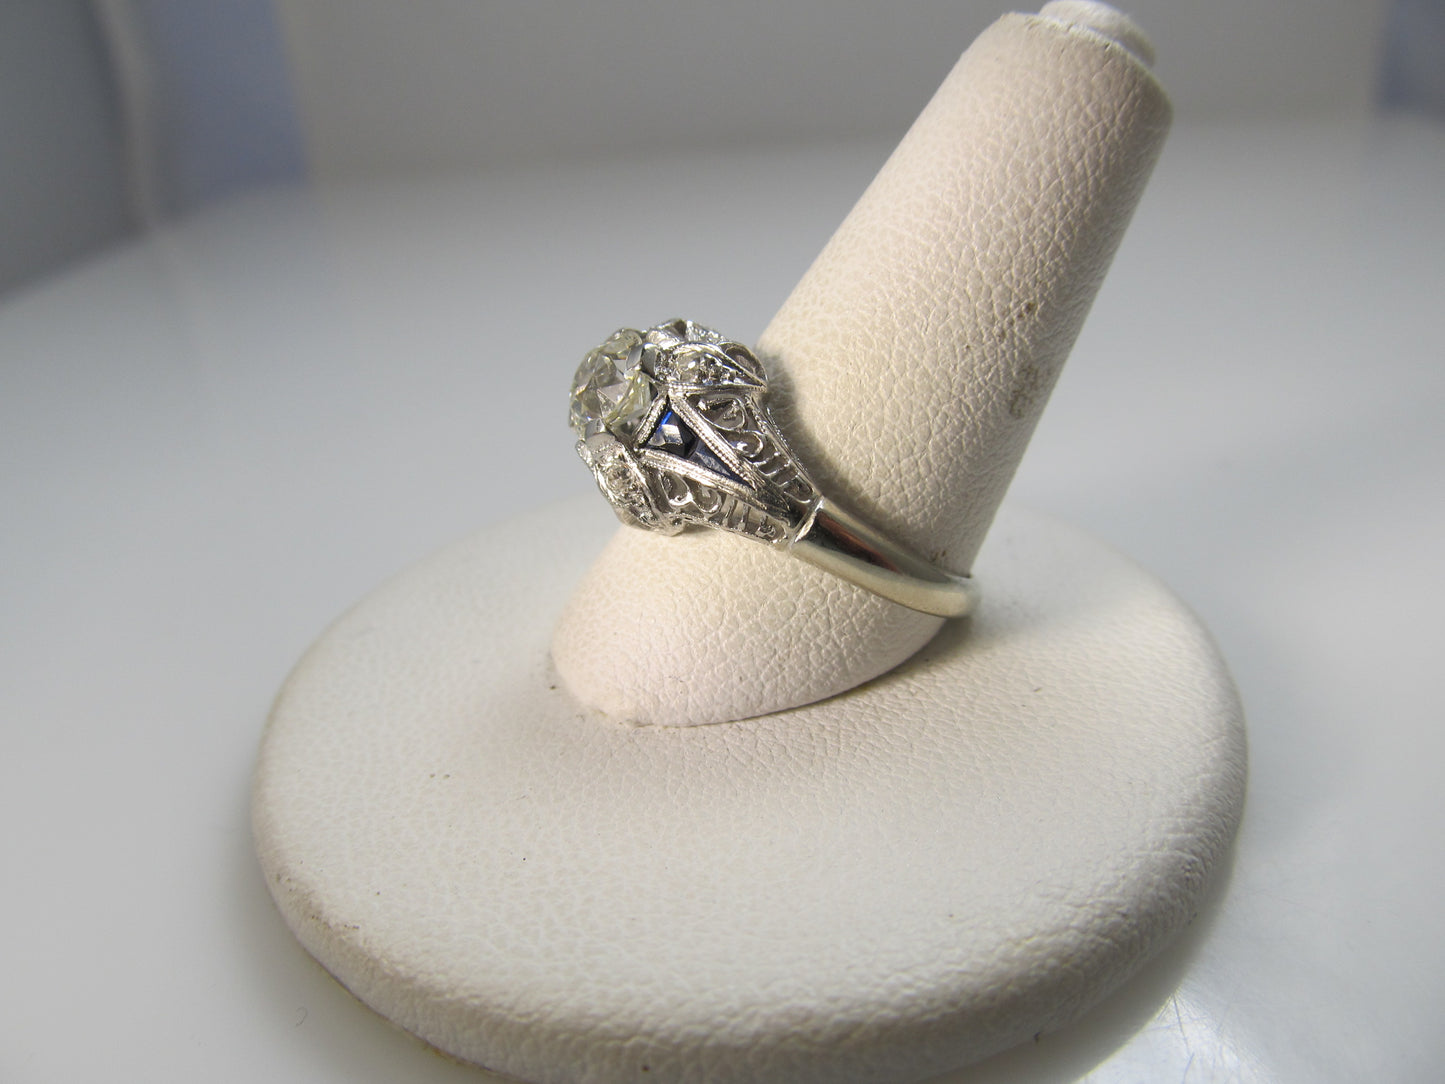 Antique platinum filigree ring with sapphires and a .75ct diamond, circa 1920.